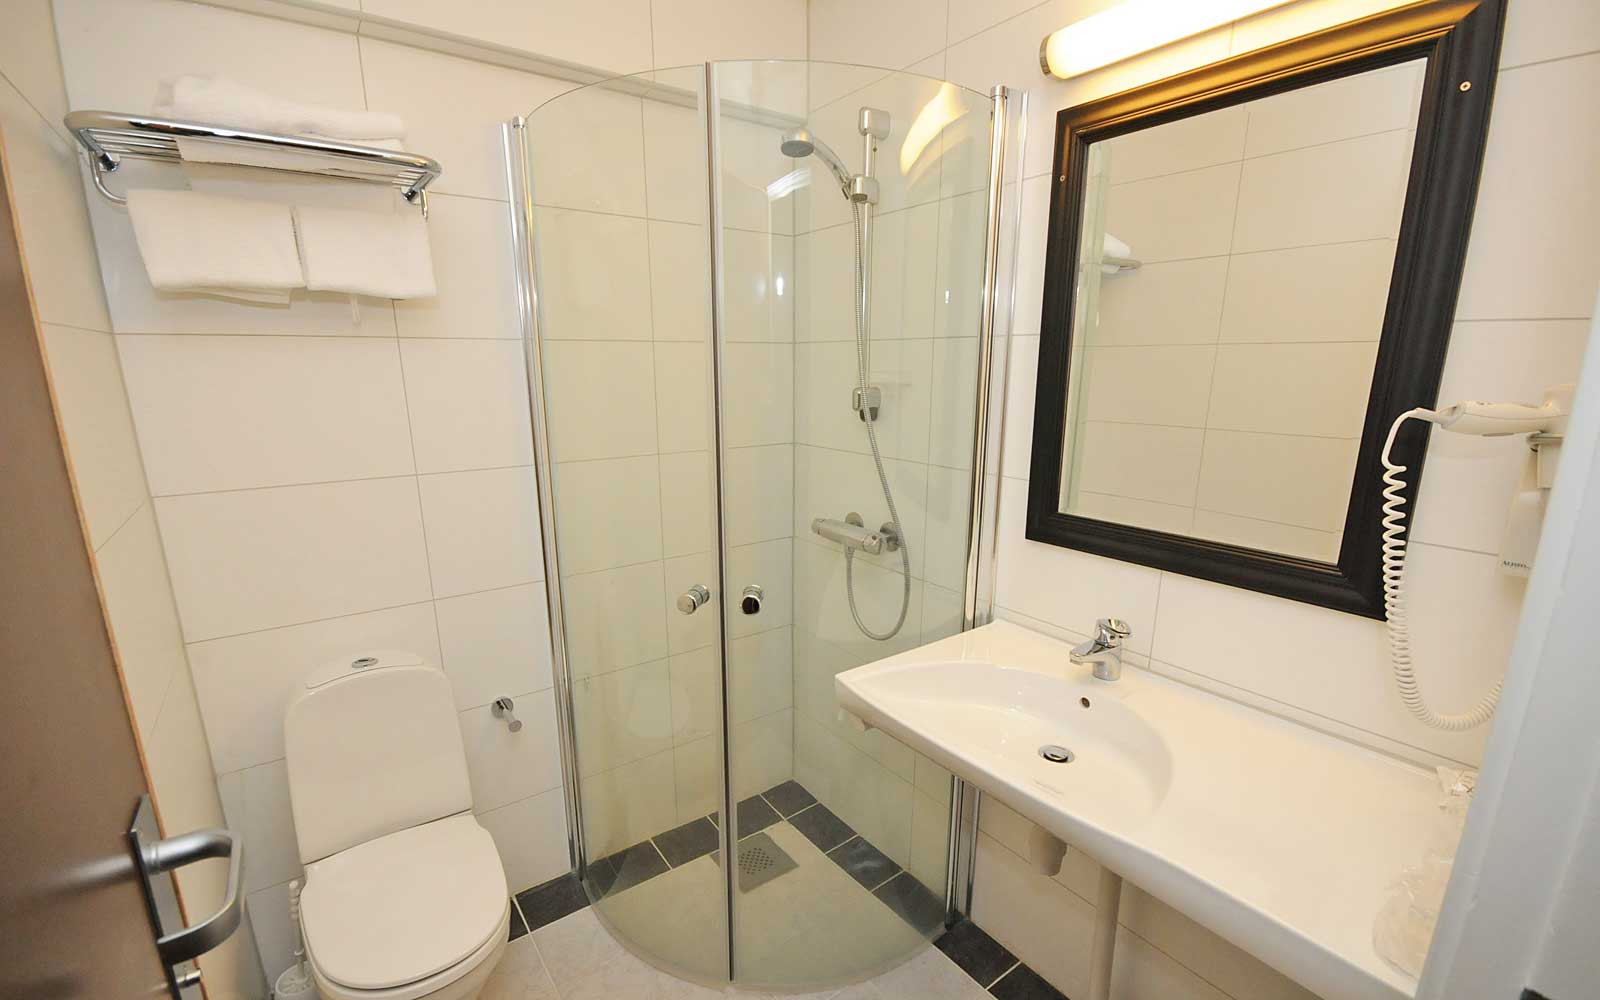 Trysil-Knut Hotell - Apartment bathroom